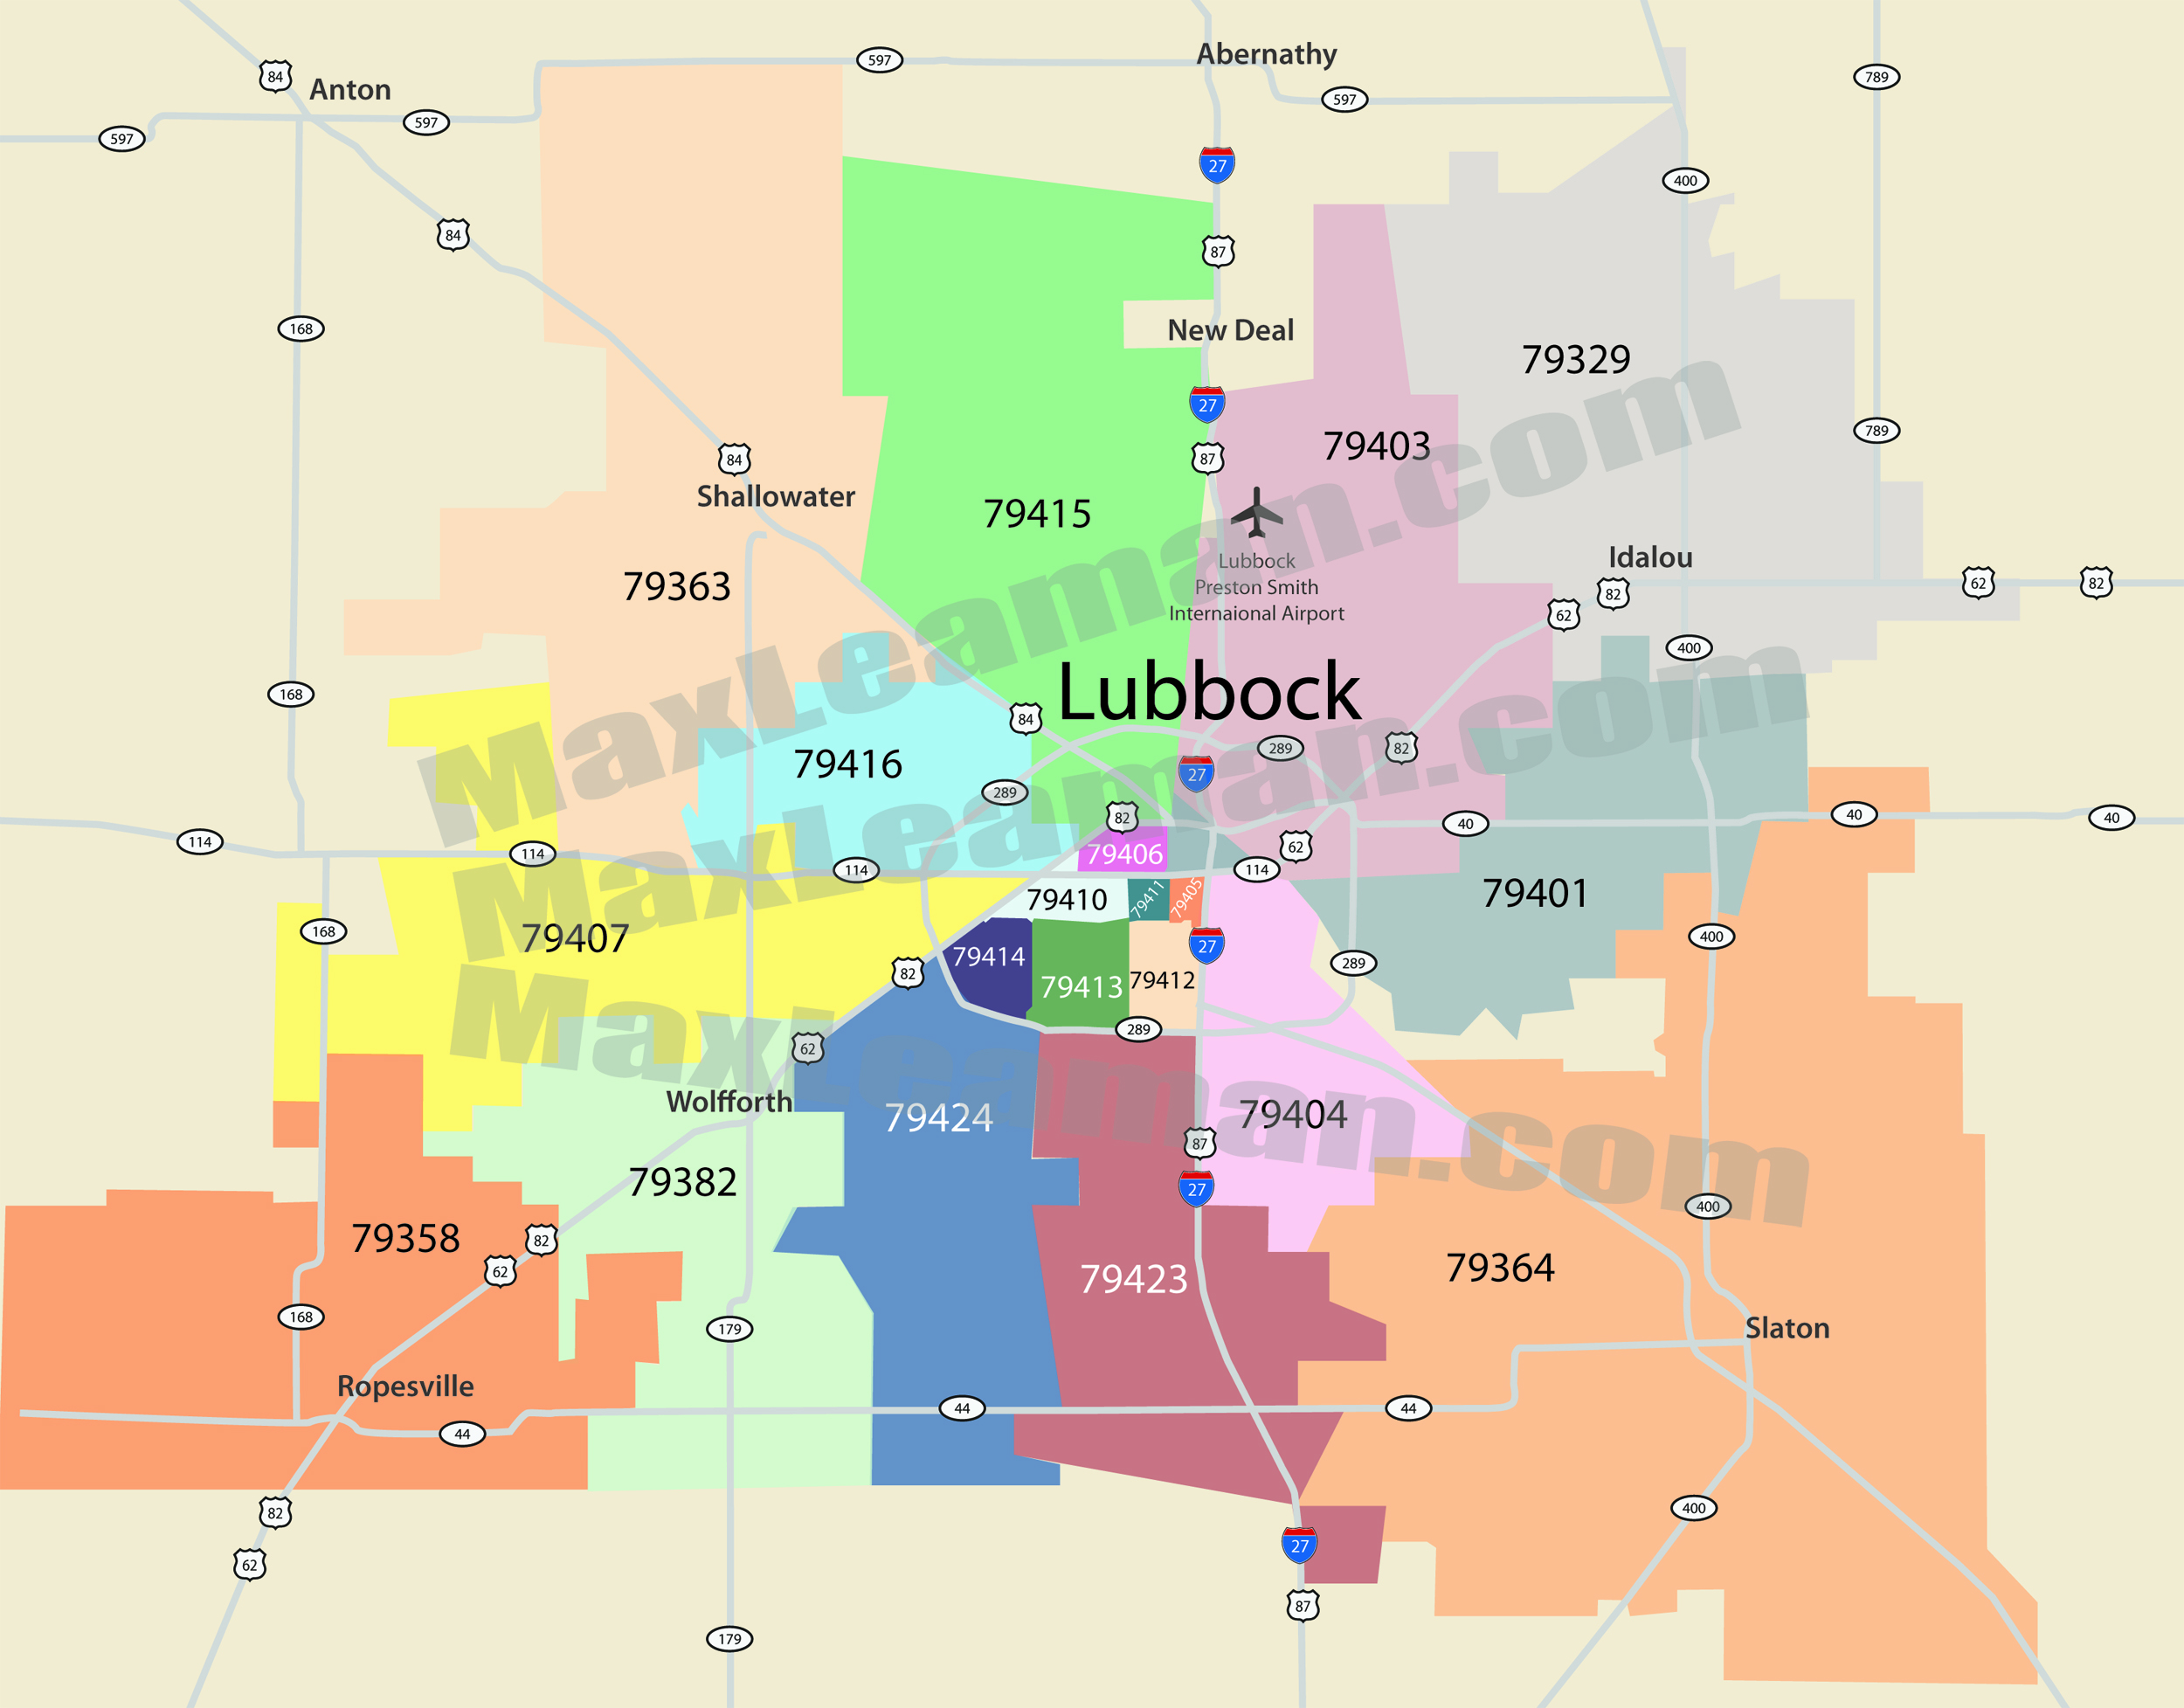 El Paso County Zip Code Map Maping Resources